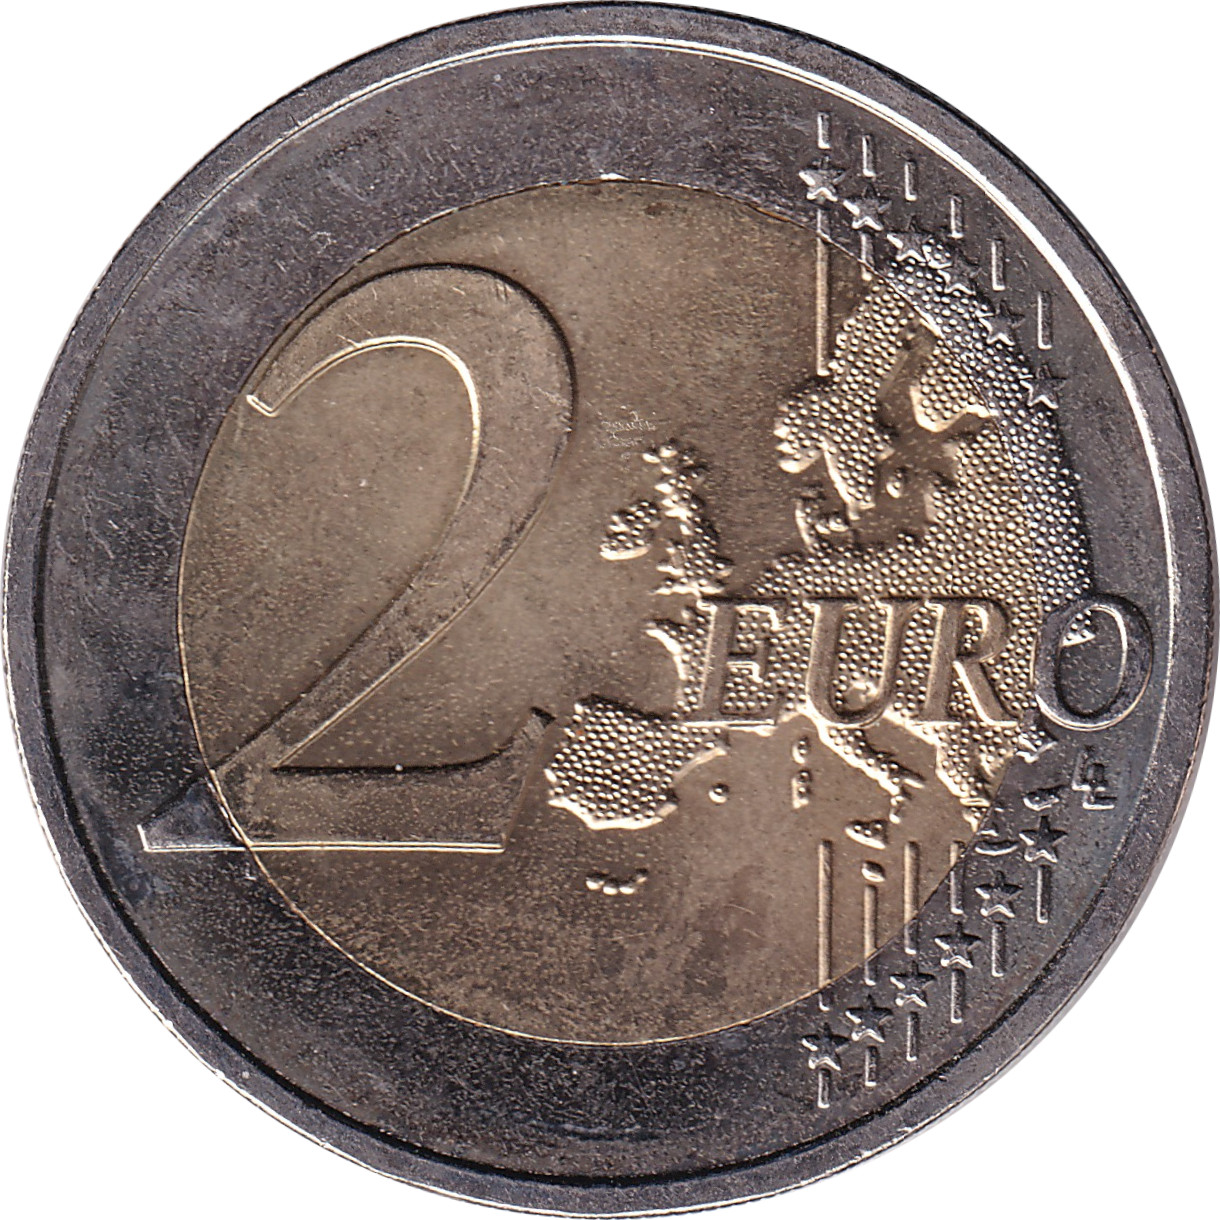 2 euro - Mise en circulation de l'Euro - 10 ans